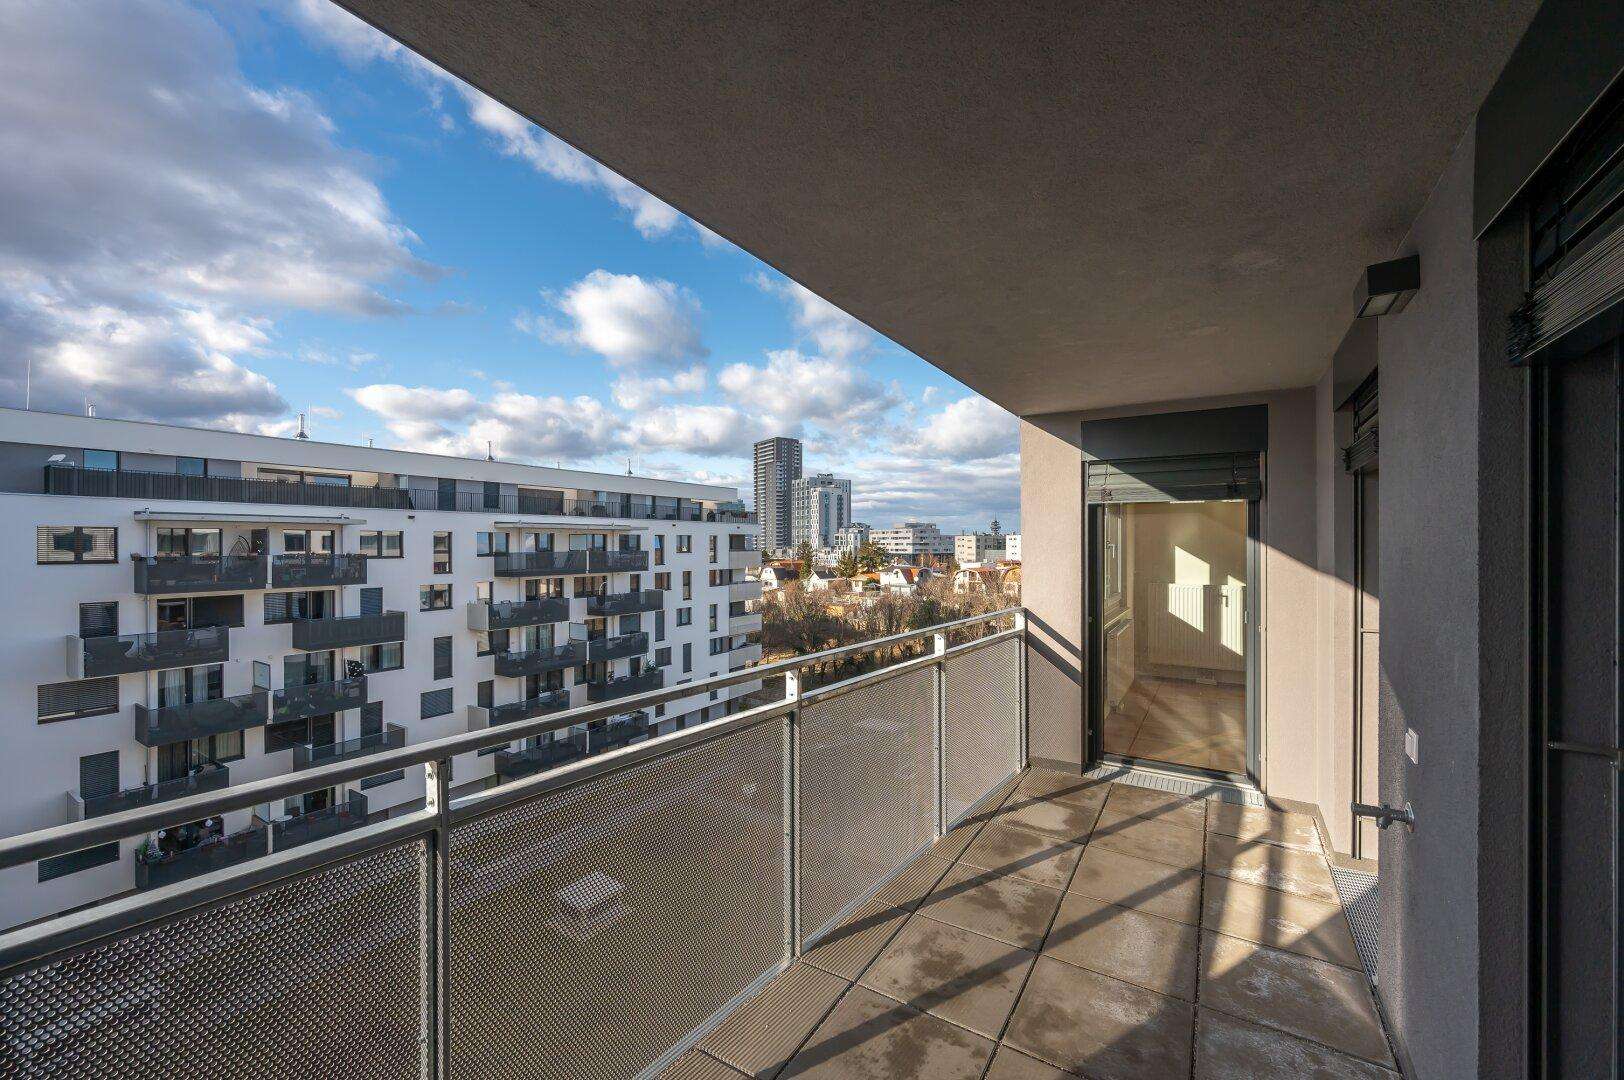 ++PROVISIONSFREI++ Premium 3-Zimmer Neubau-ERSTBEZUG mit Balkon/Loggia!